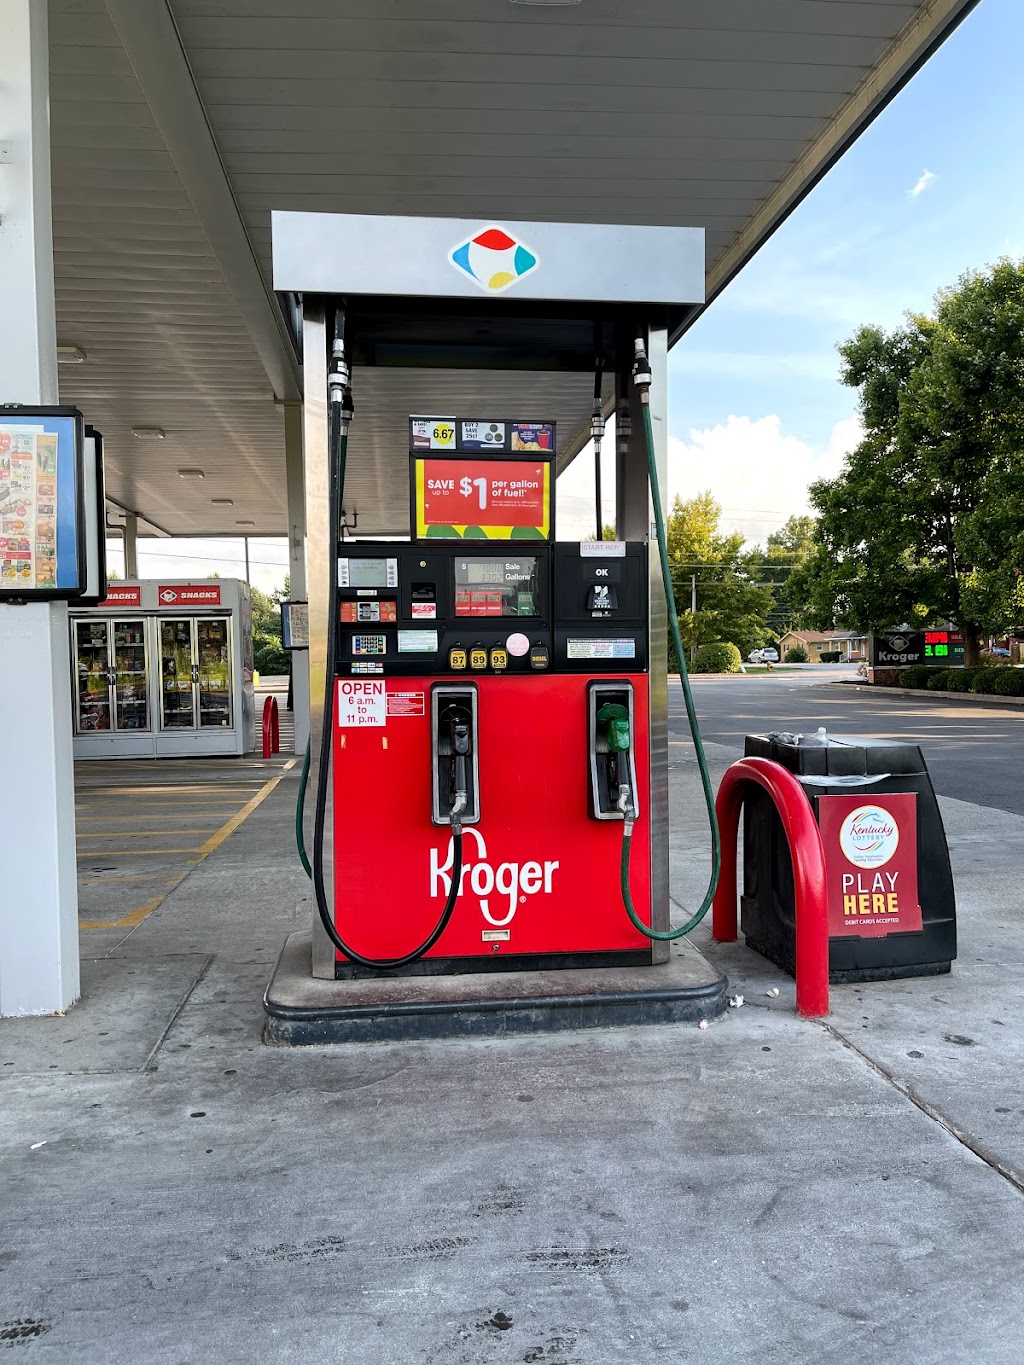 Kroger Fuel Center | 7509 Terry Rd, Louisville, KY 40258 | Phone: (502) 937-3178